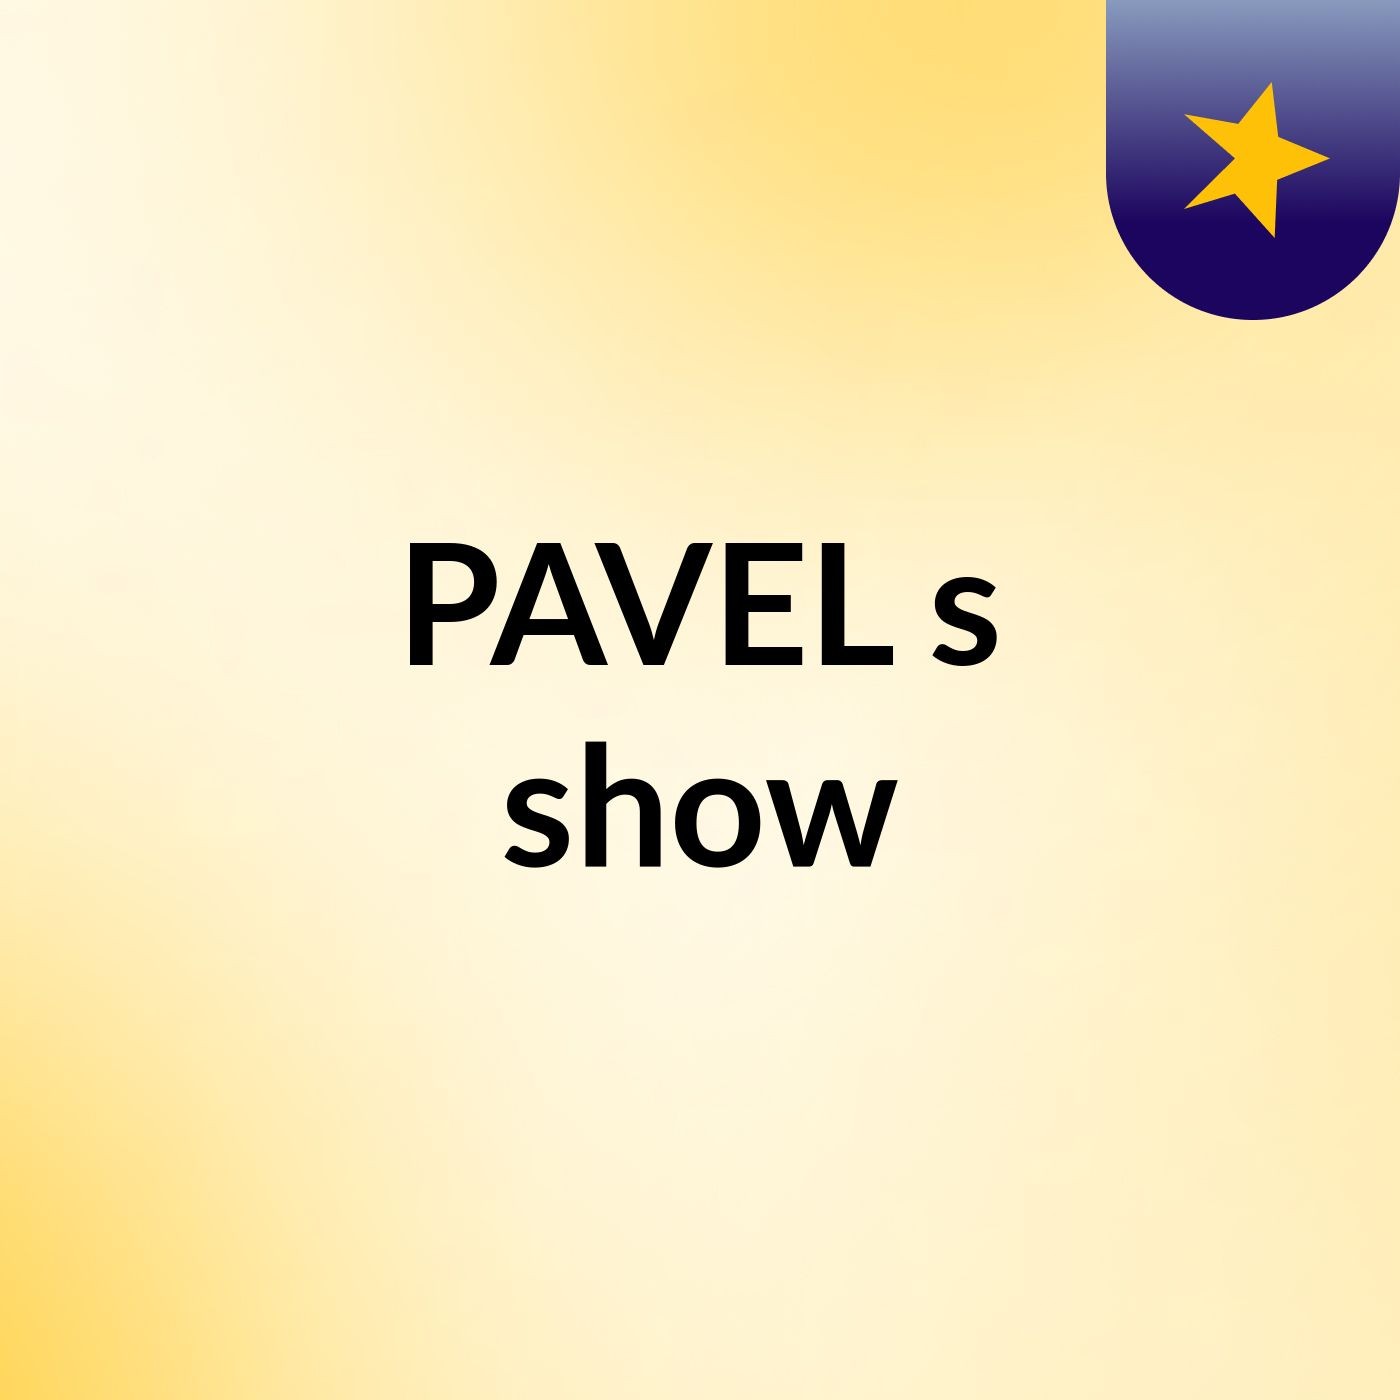 PAVEL's show